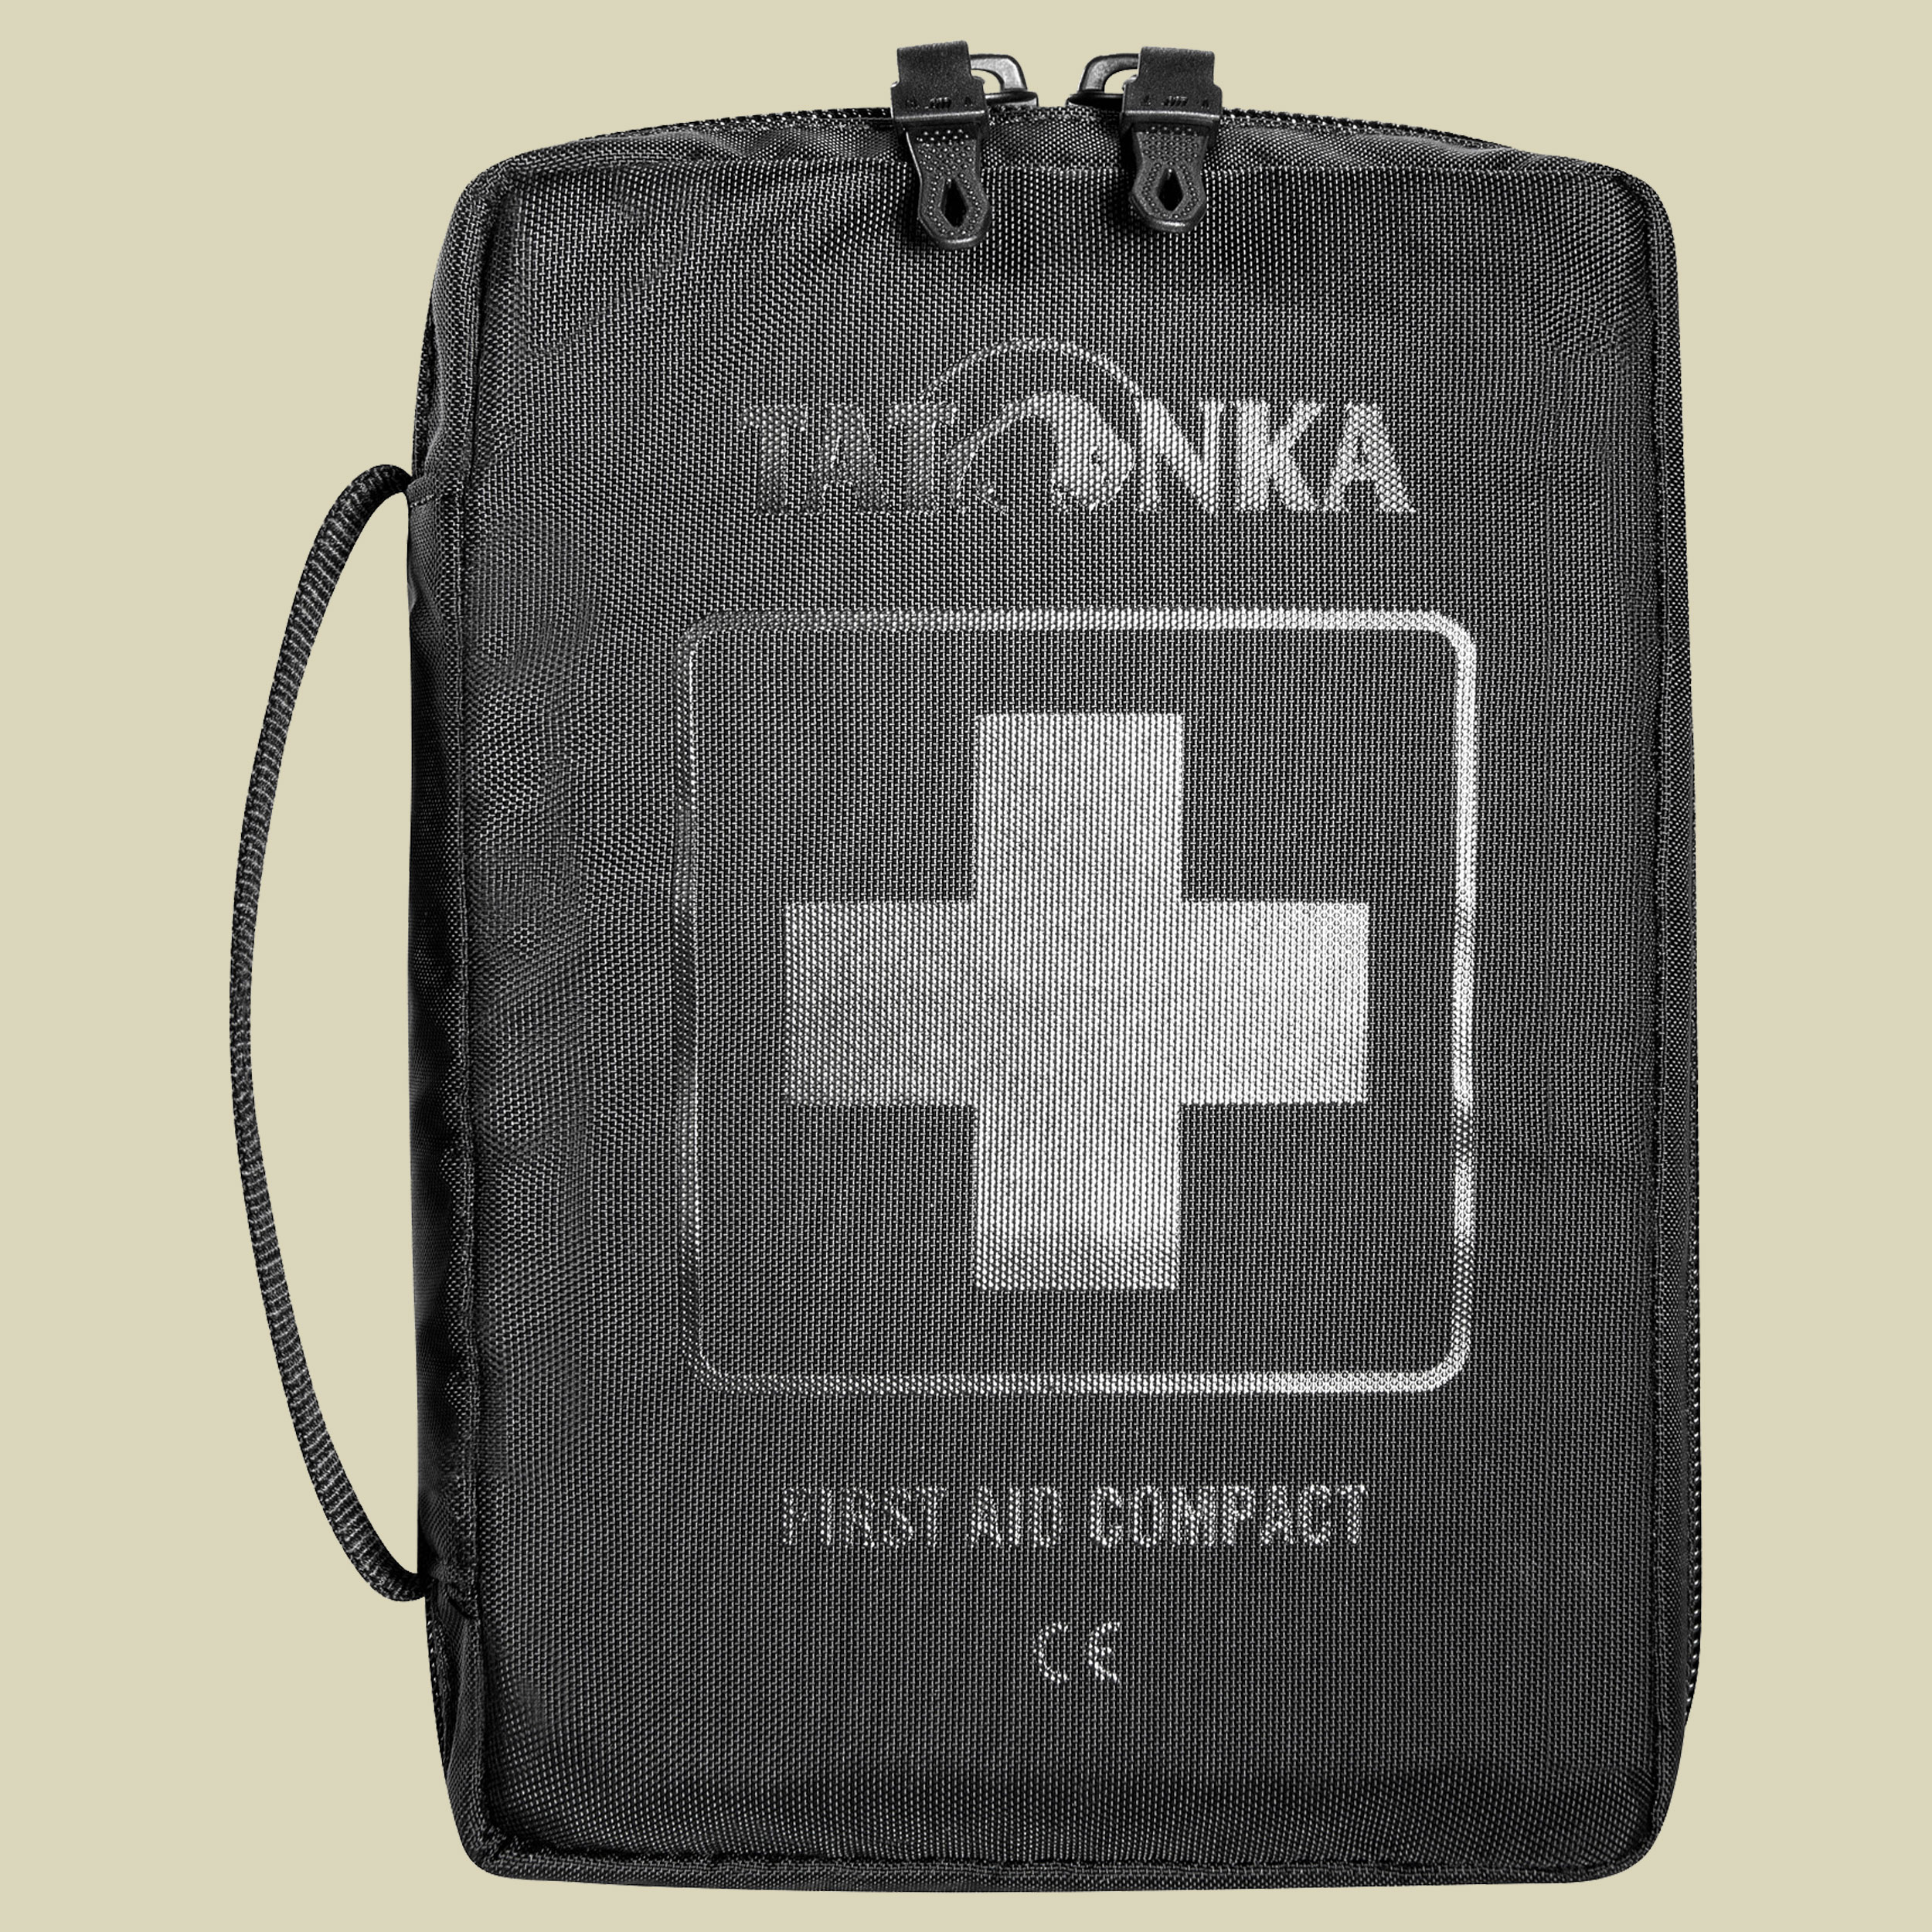 First Aid Compact Farbe black